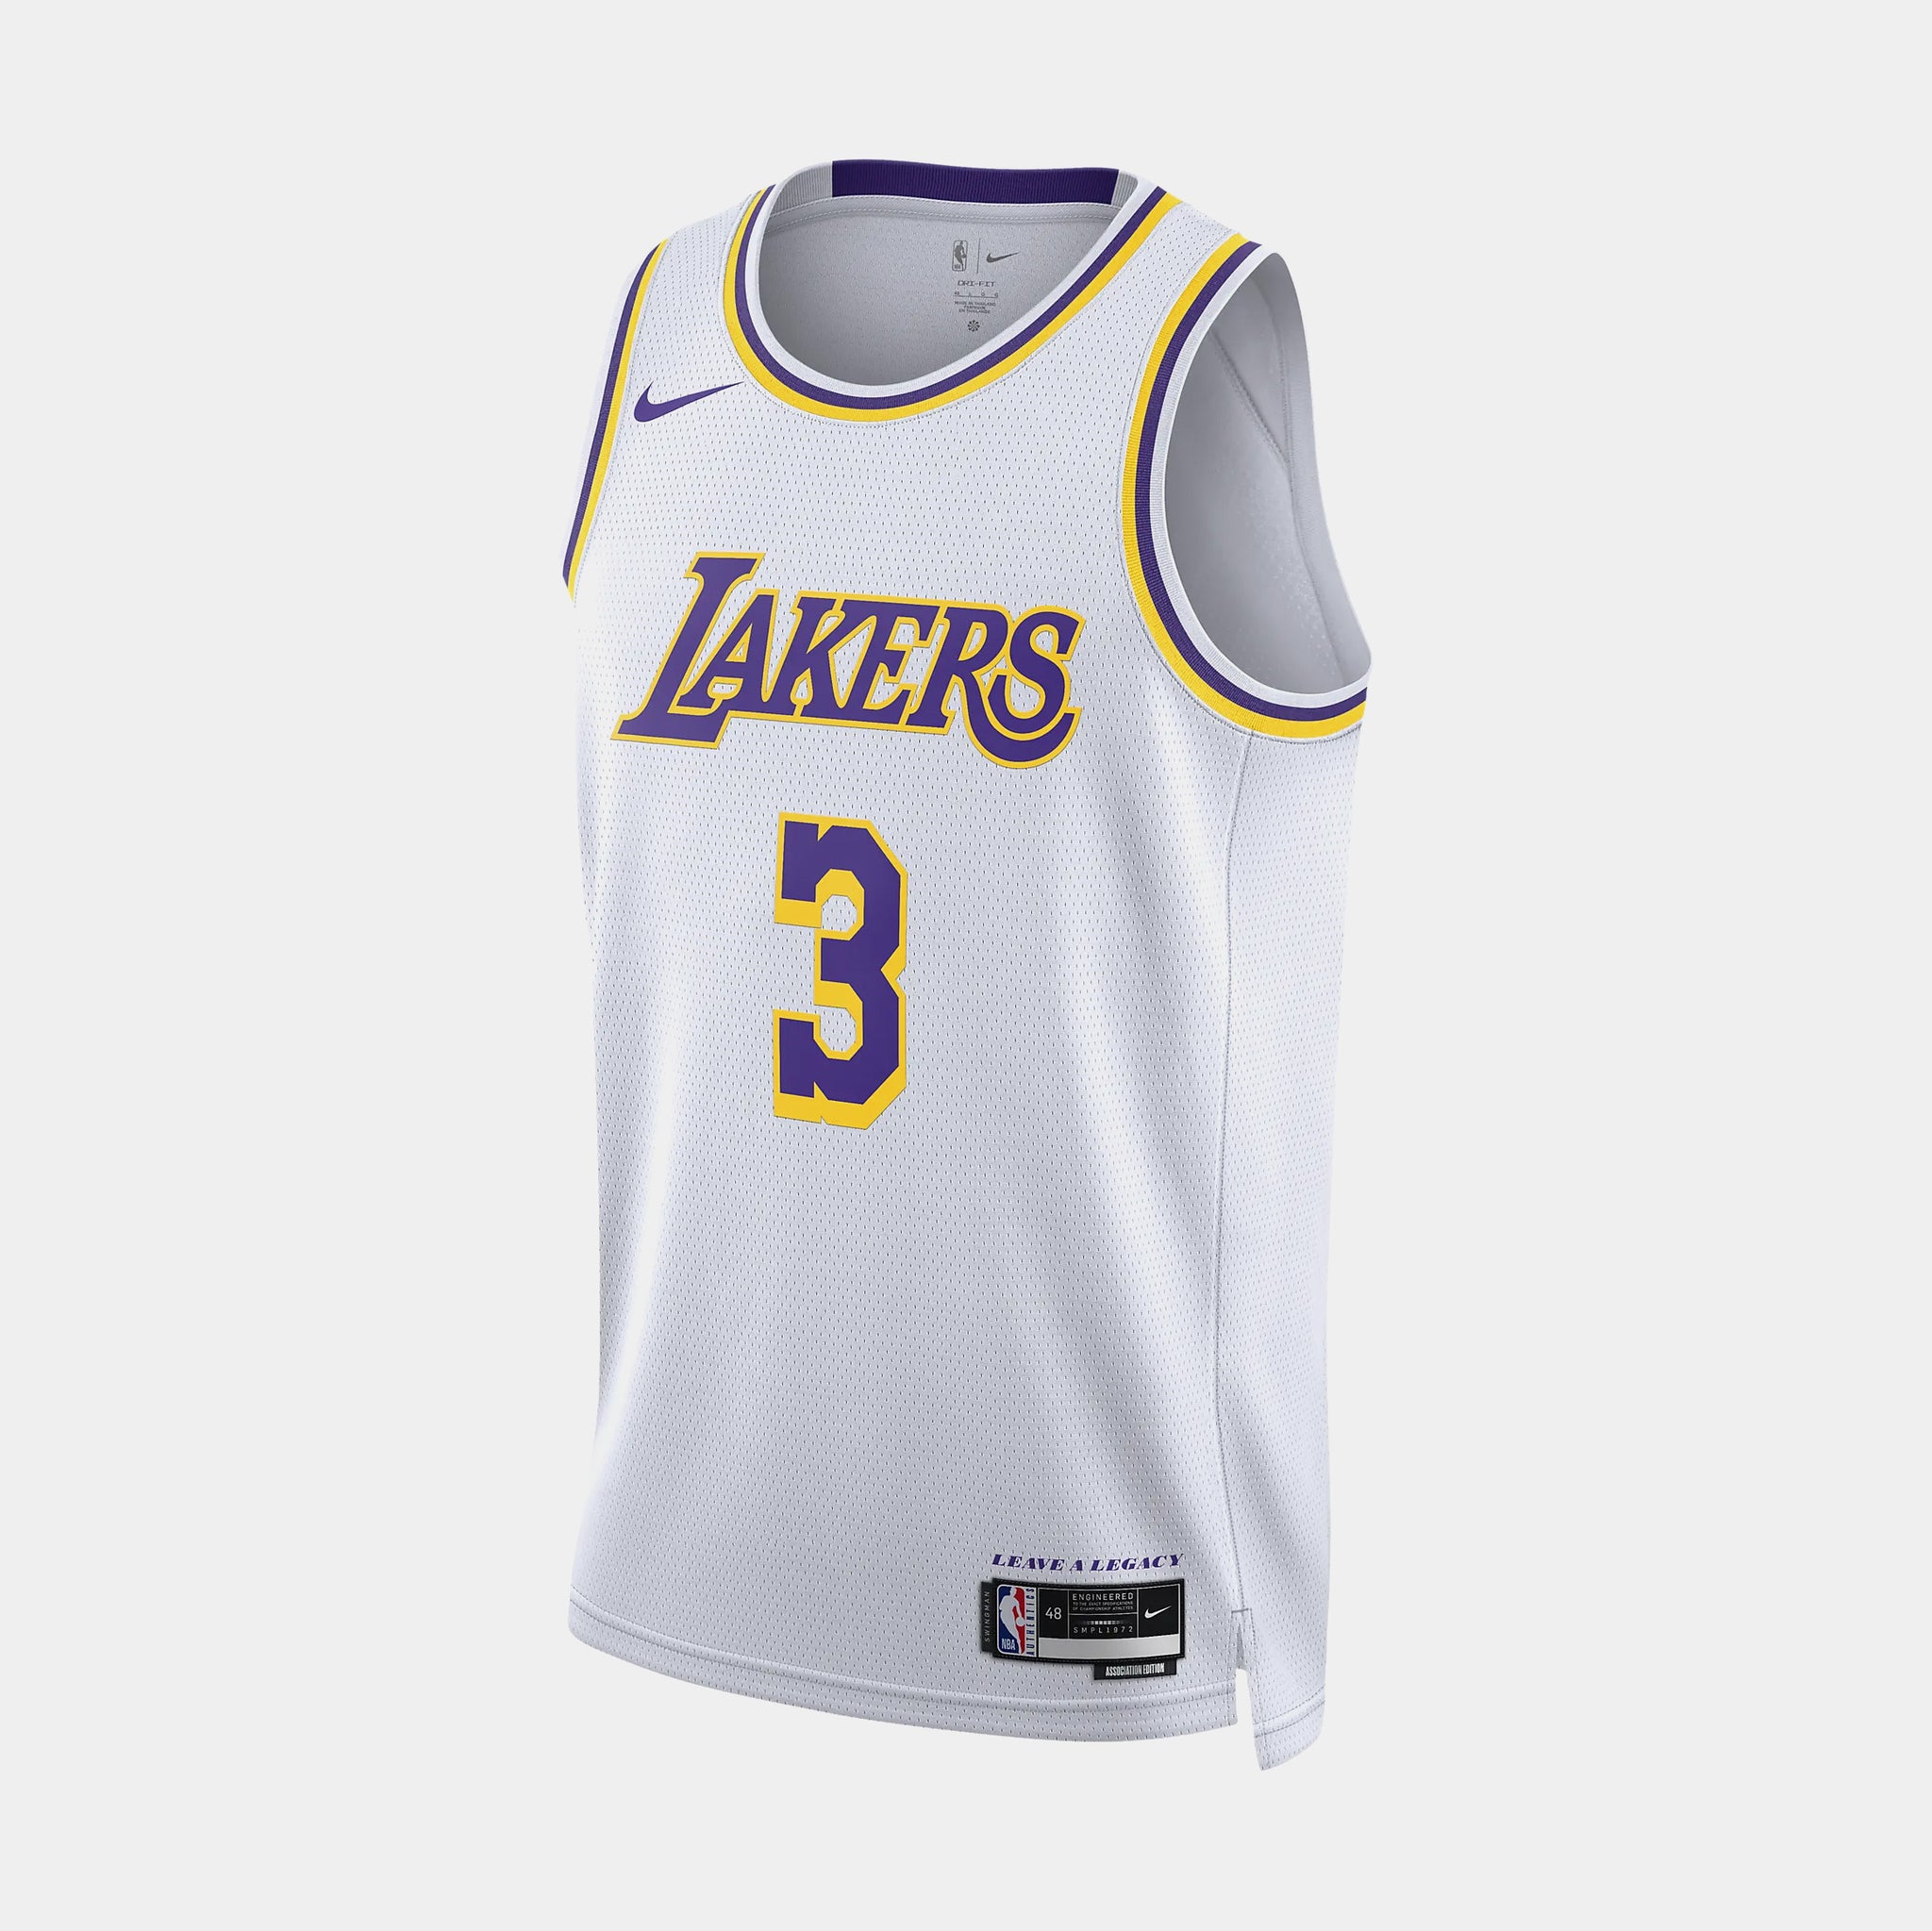 Nike Basketball NBA LA Lakers Anthony Davis Swingman jersey unisex vest in  yellow